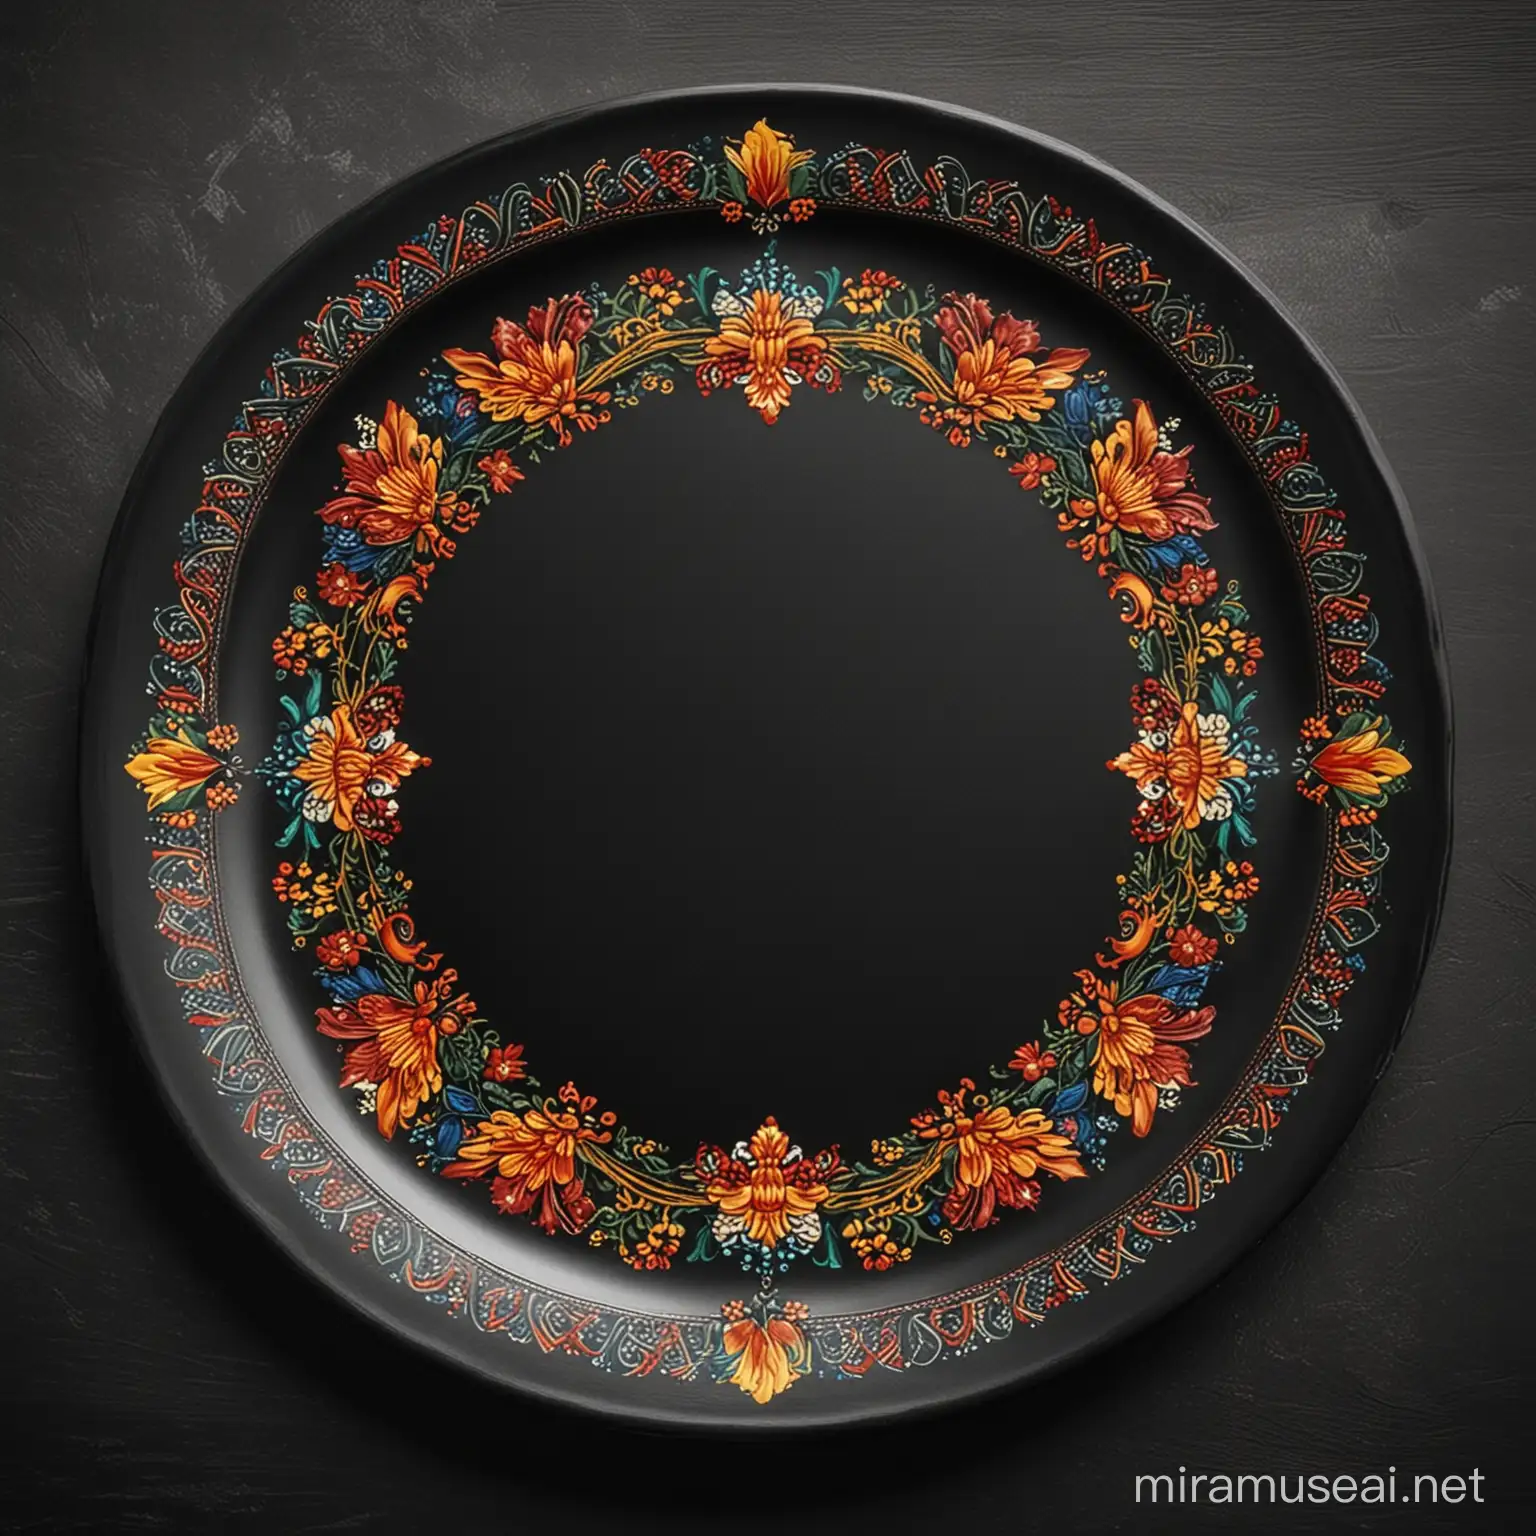 Traditional Ukrainian Ceramic Plate with Intricate Black Ornament